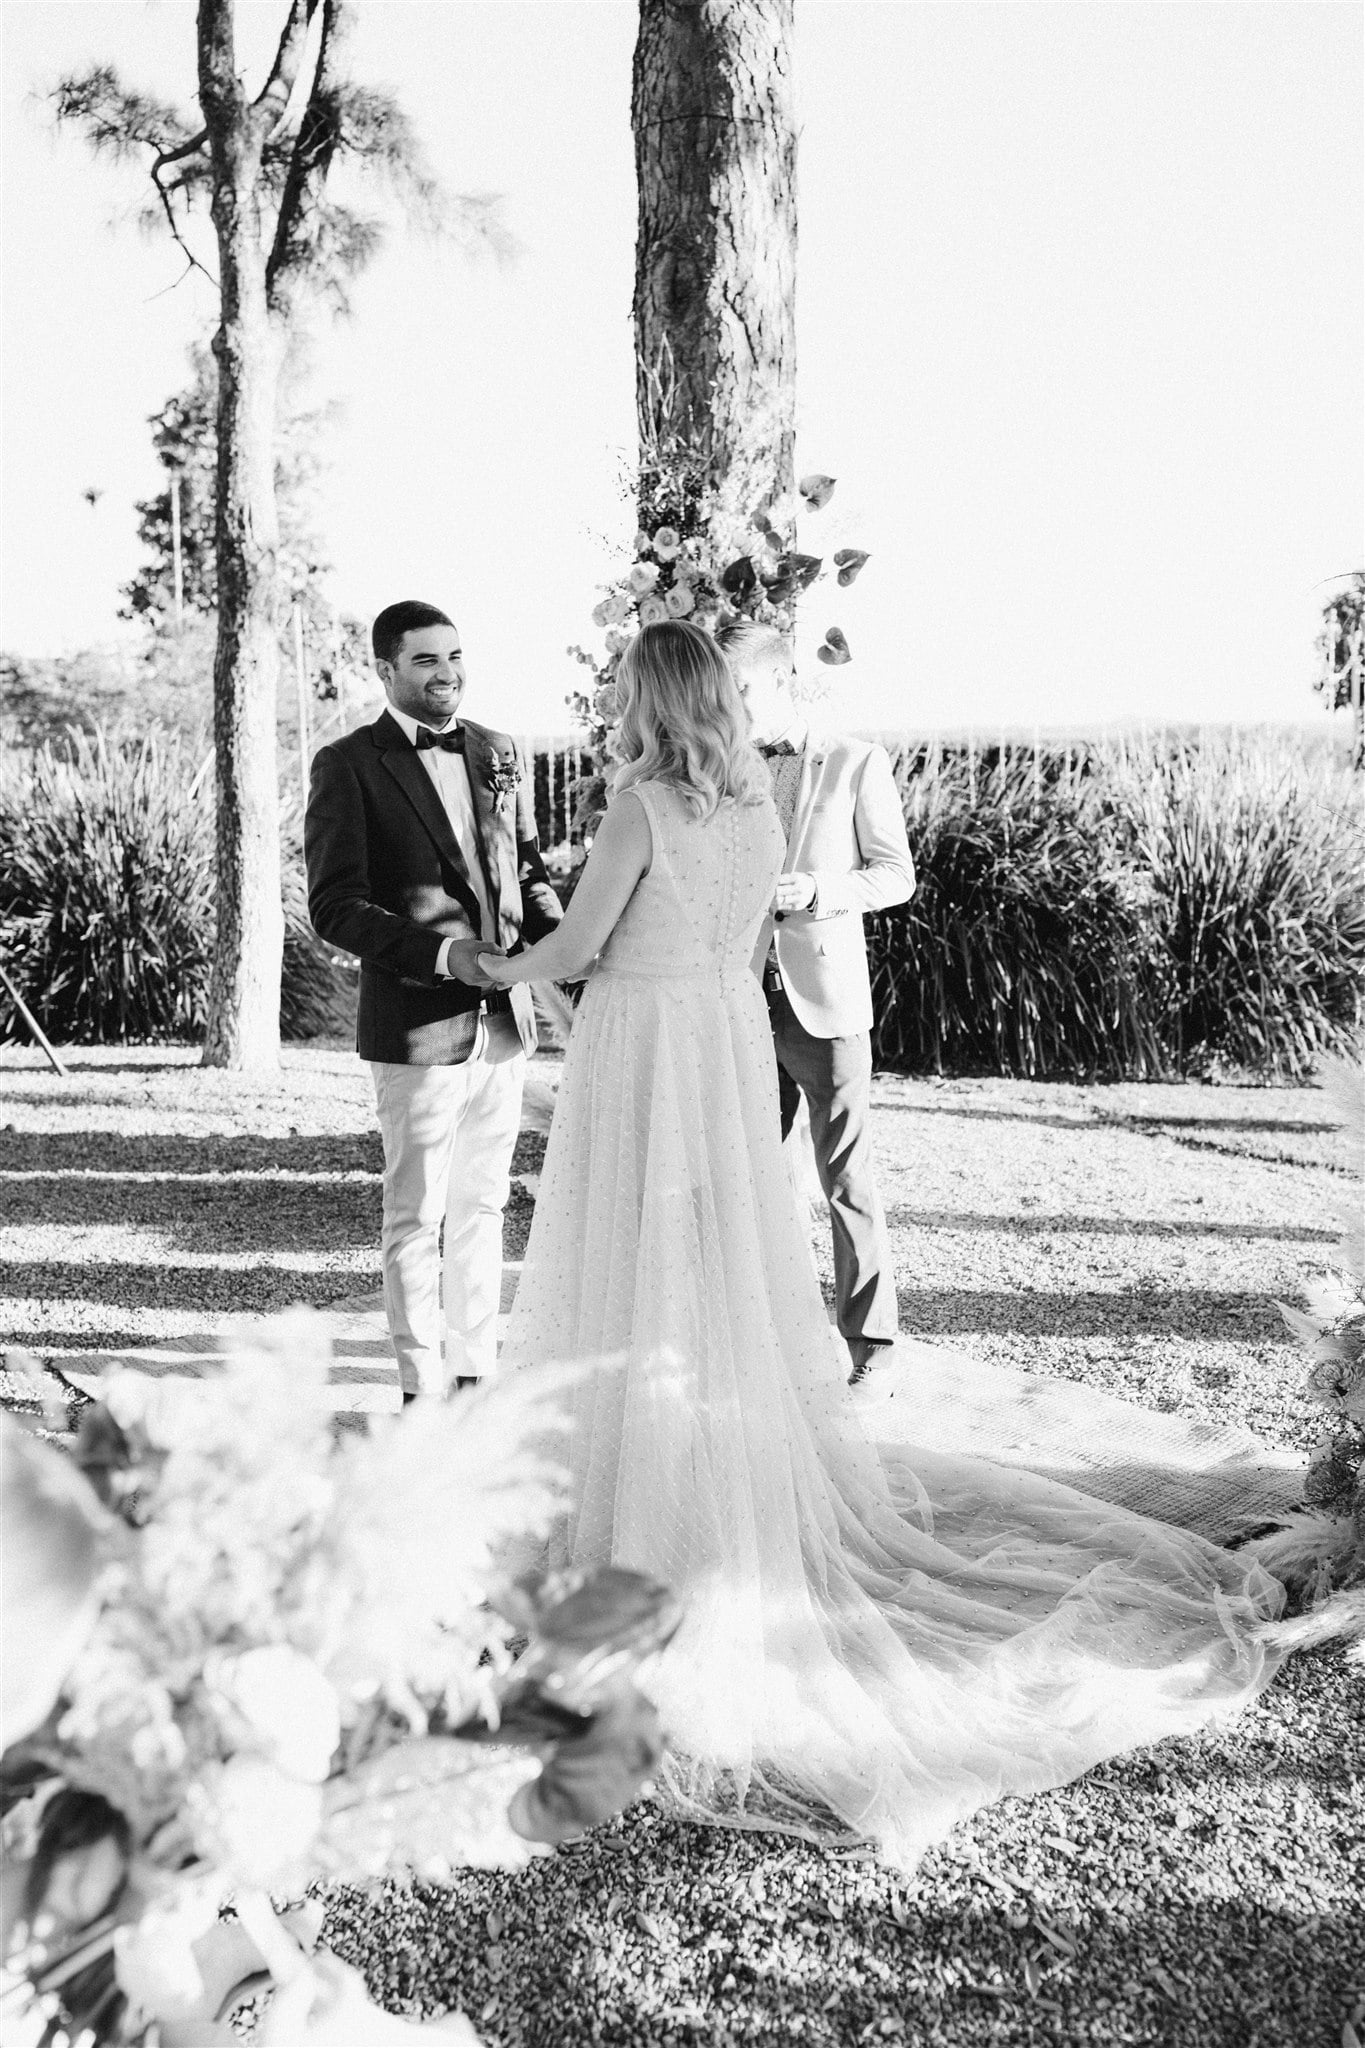 LAUREN & CHRIS’ BYRON BAY WEDDING – Hello May